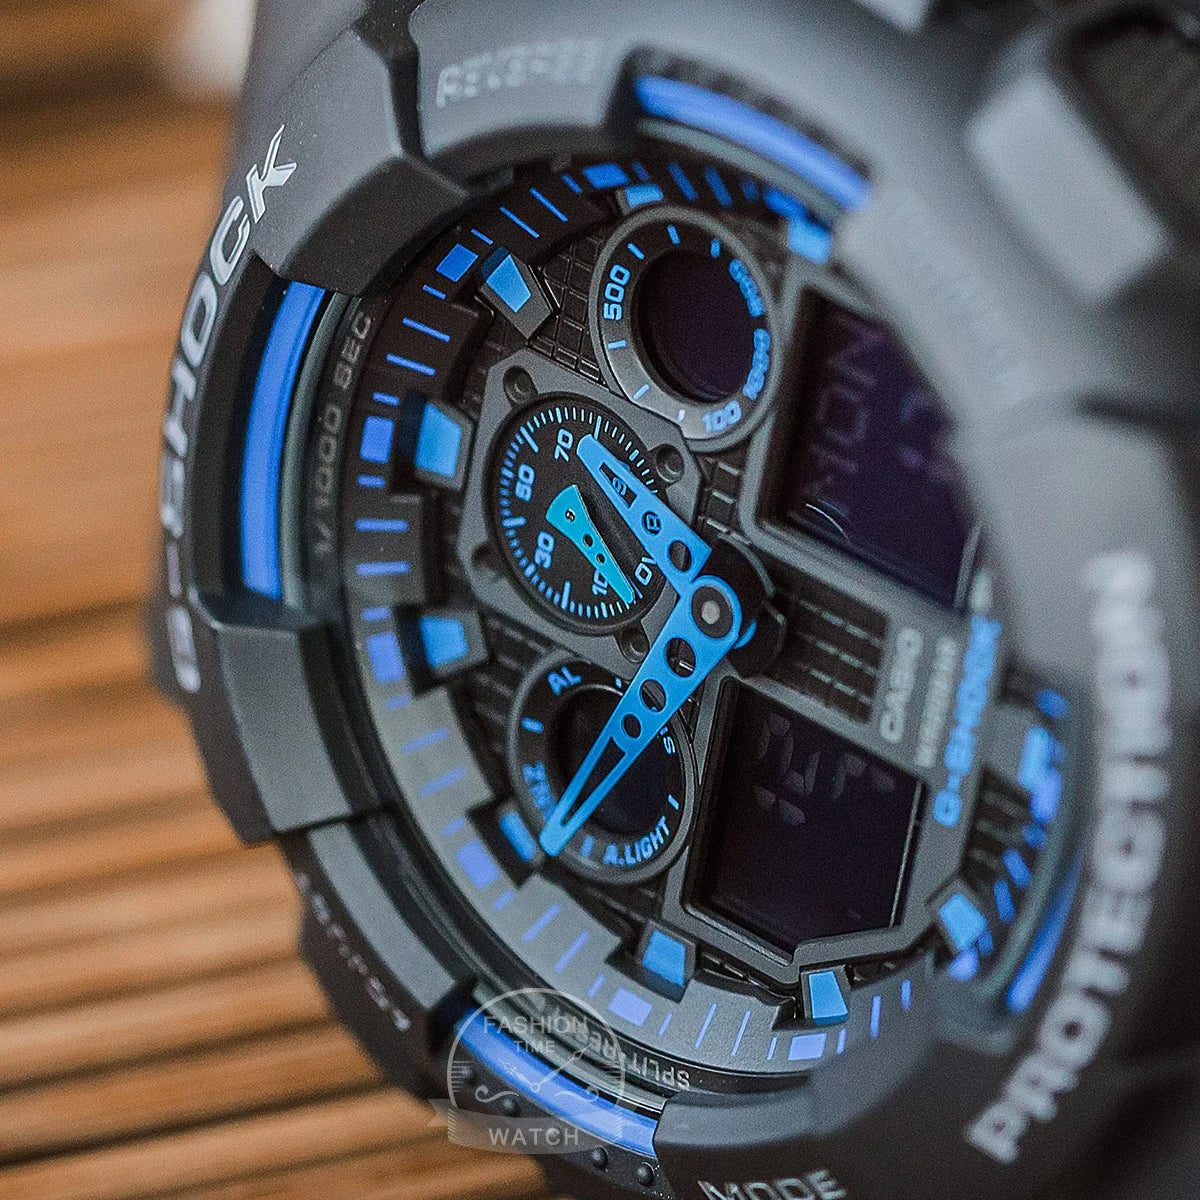 Casio watch men g shock top luxury set military Chronograph LED digital watch sport Waterproof quartz menwatch